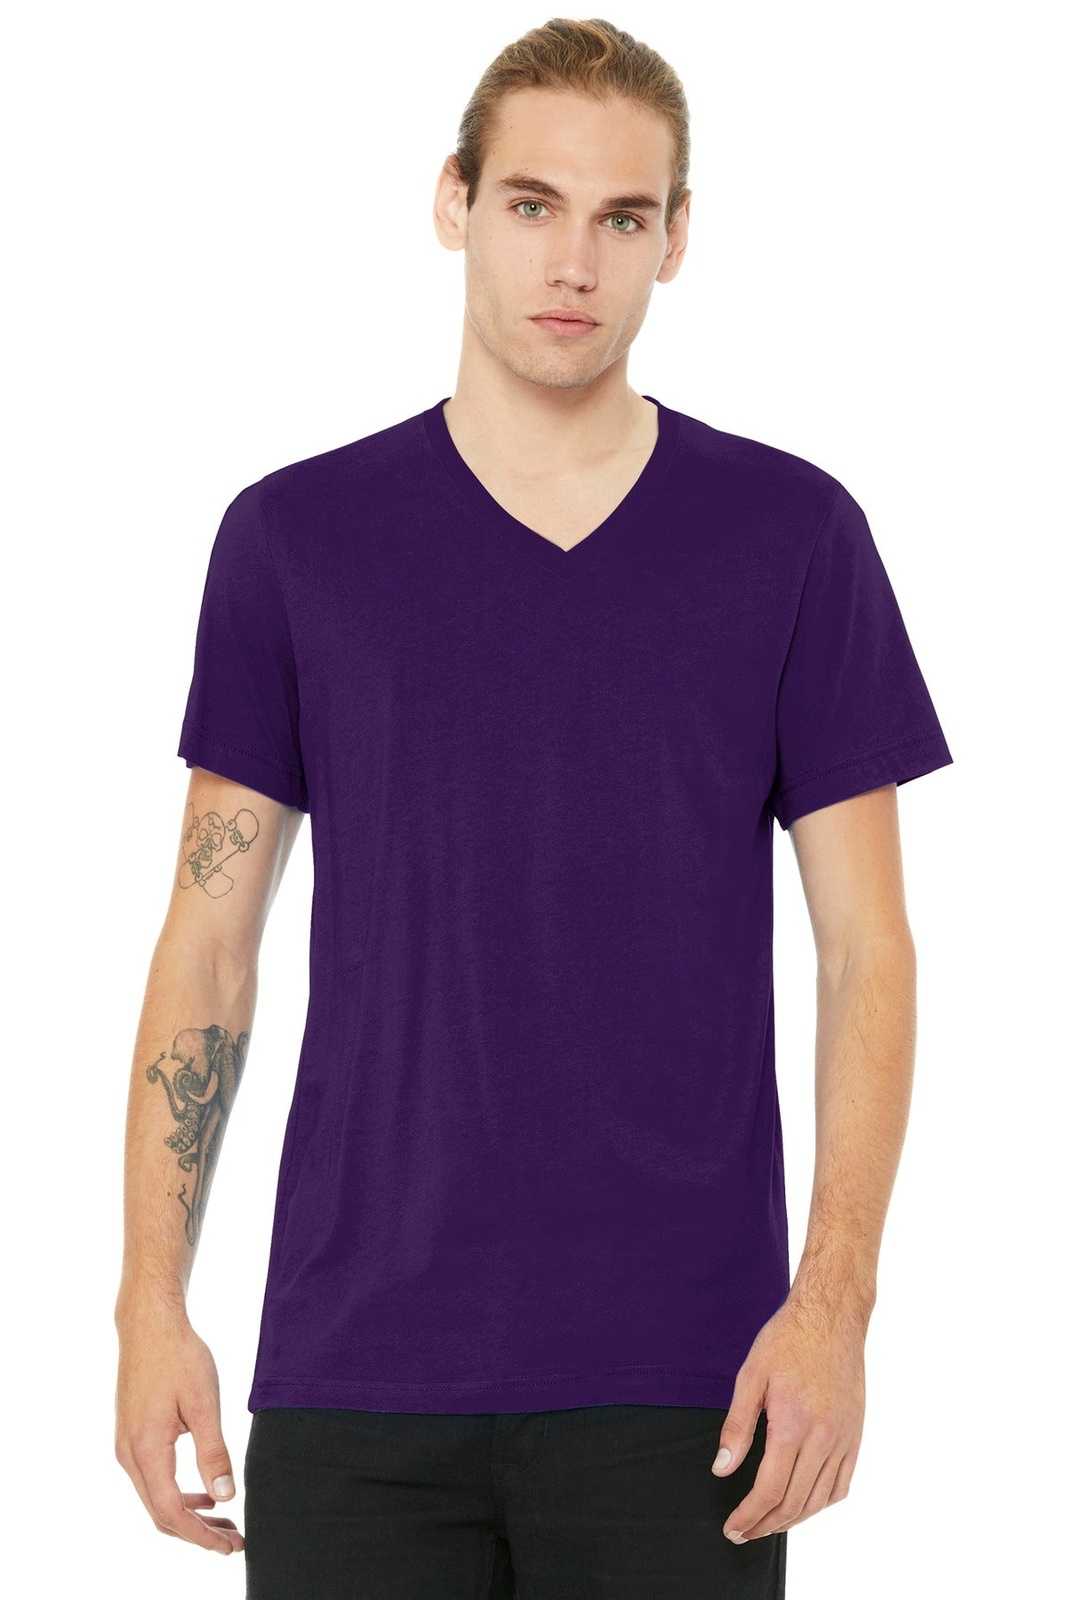 Bella + Canvas 3005 Unisex Jersey Short Sleeve V-Neck Tee - Team Purple - HIT a Double